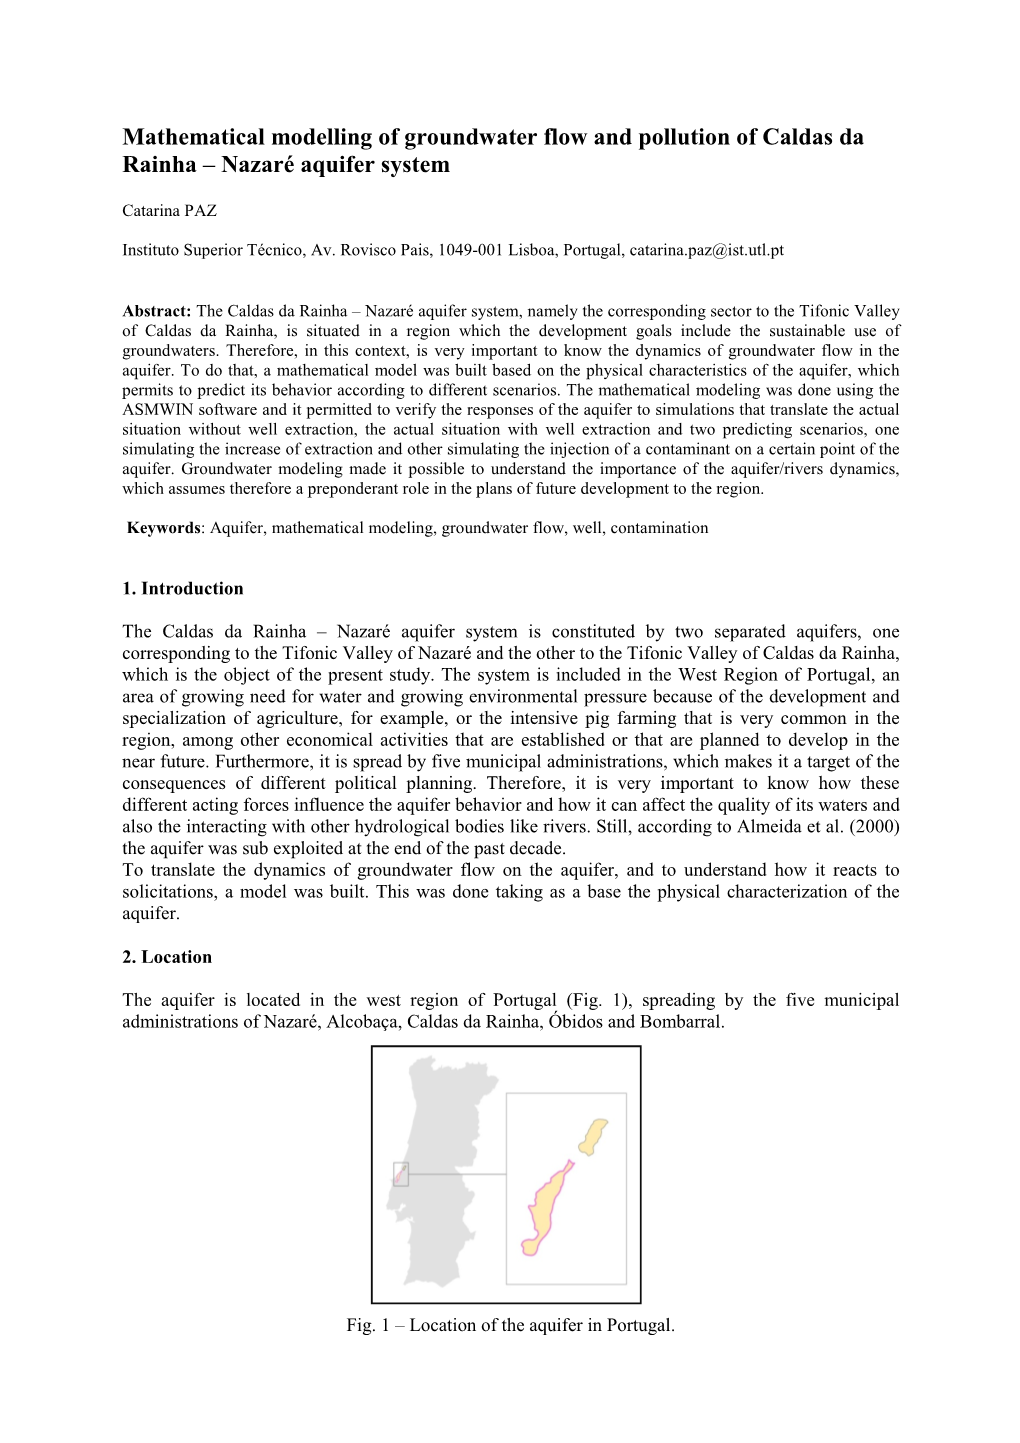 Mathematical Modelling of Groundwater Flow and Pollution of Caldas Da Rainha – Nazaré Aquifer System